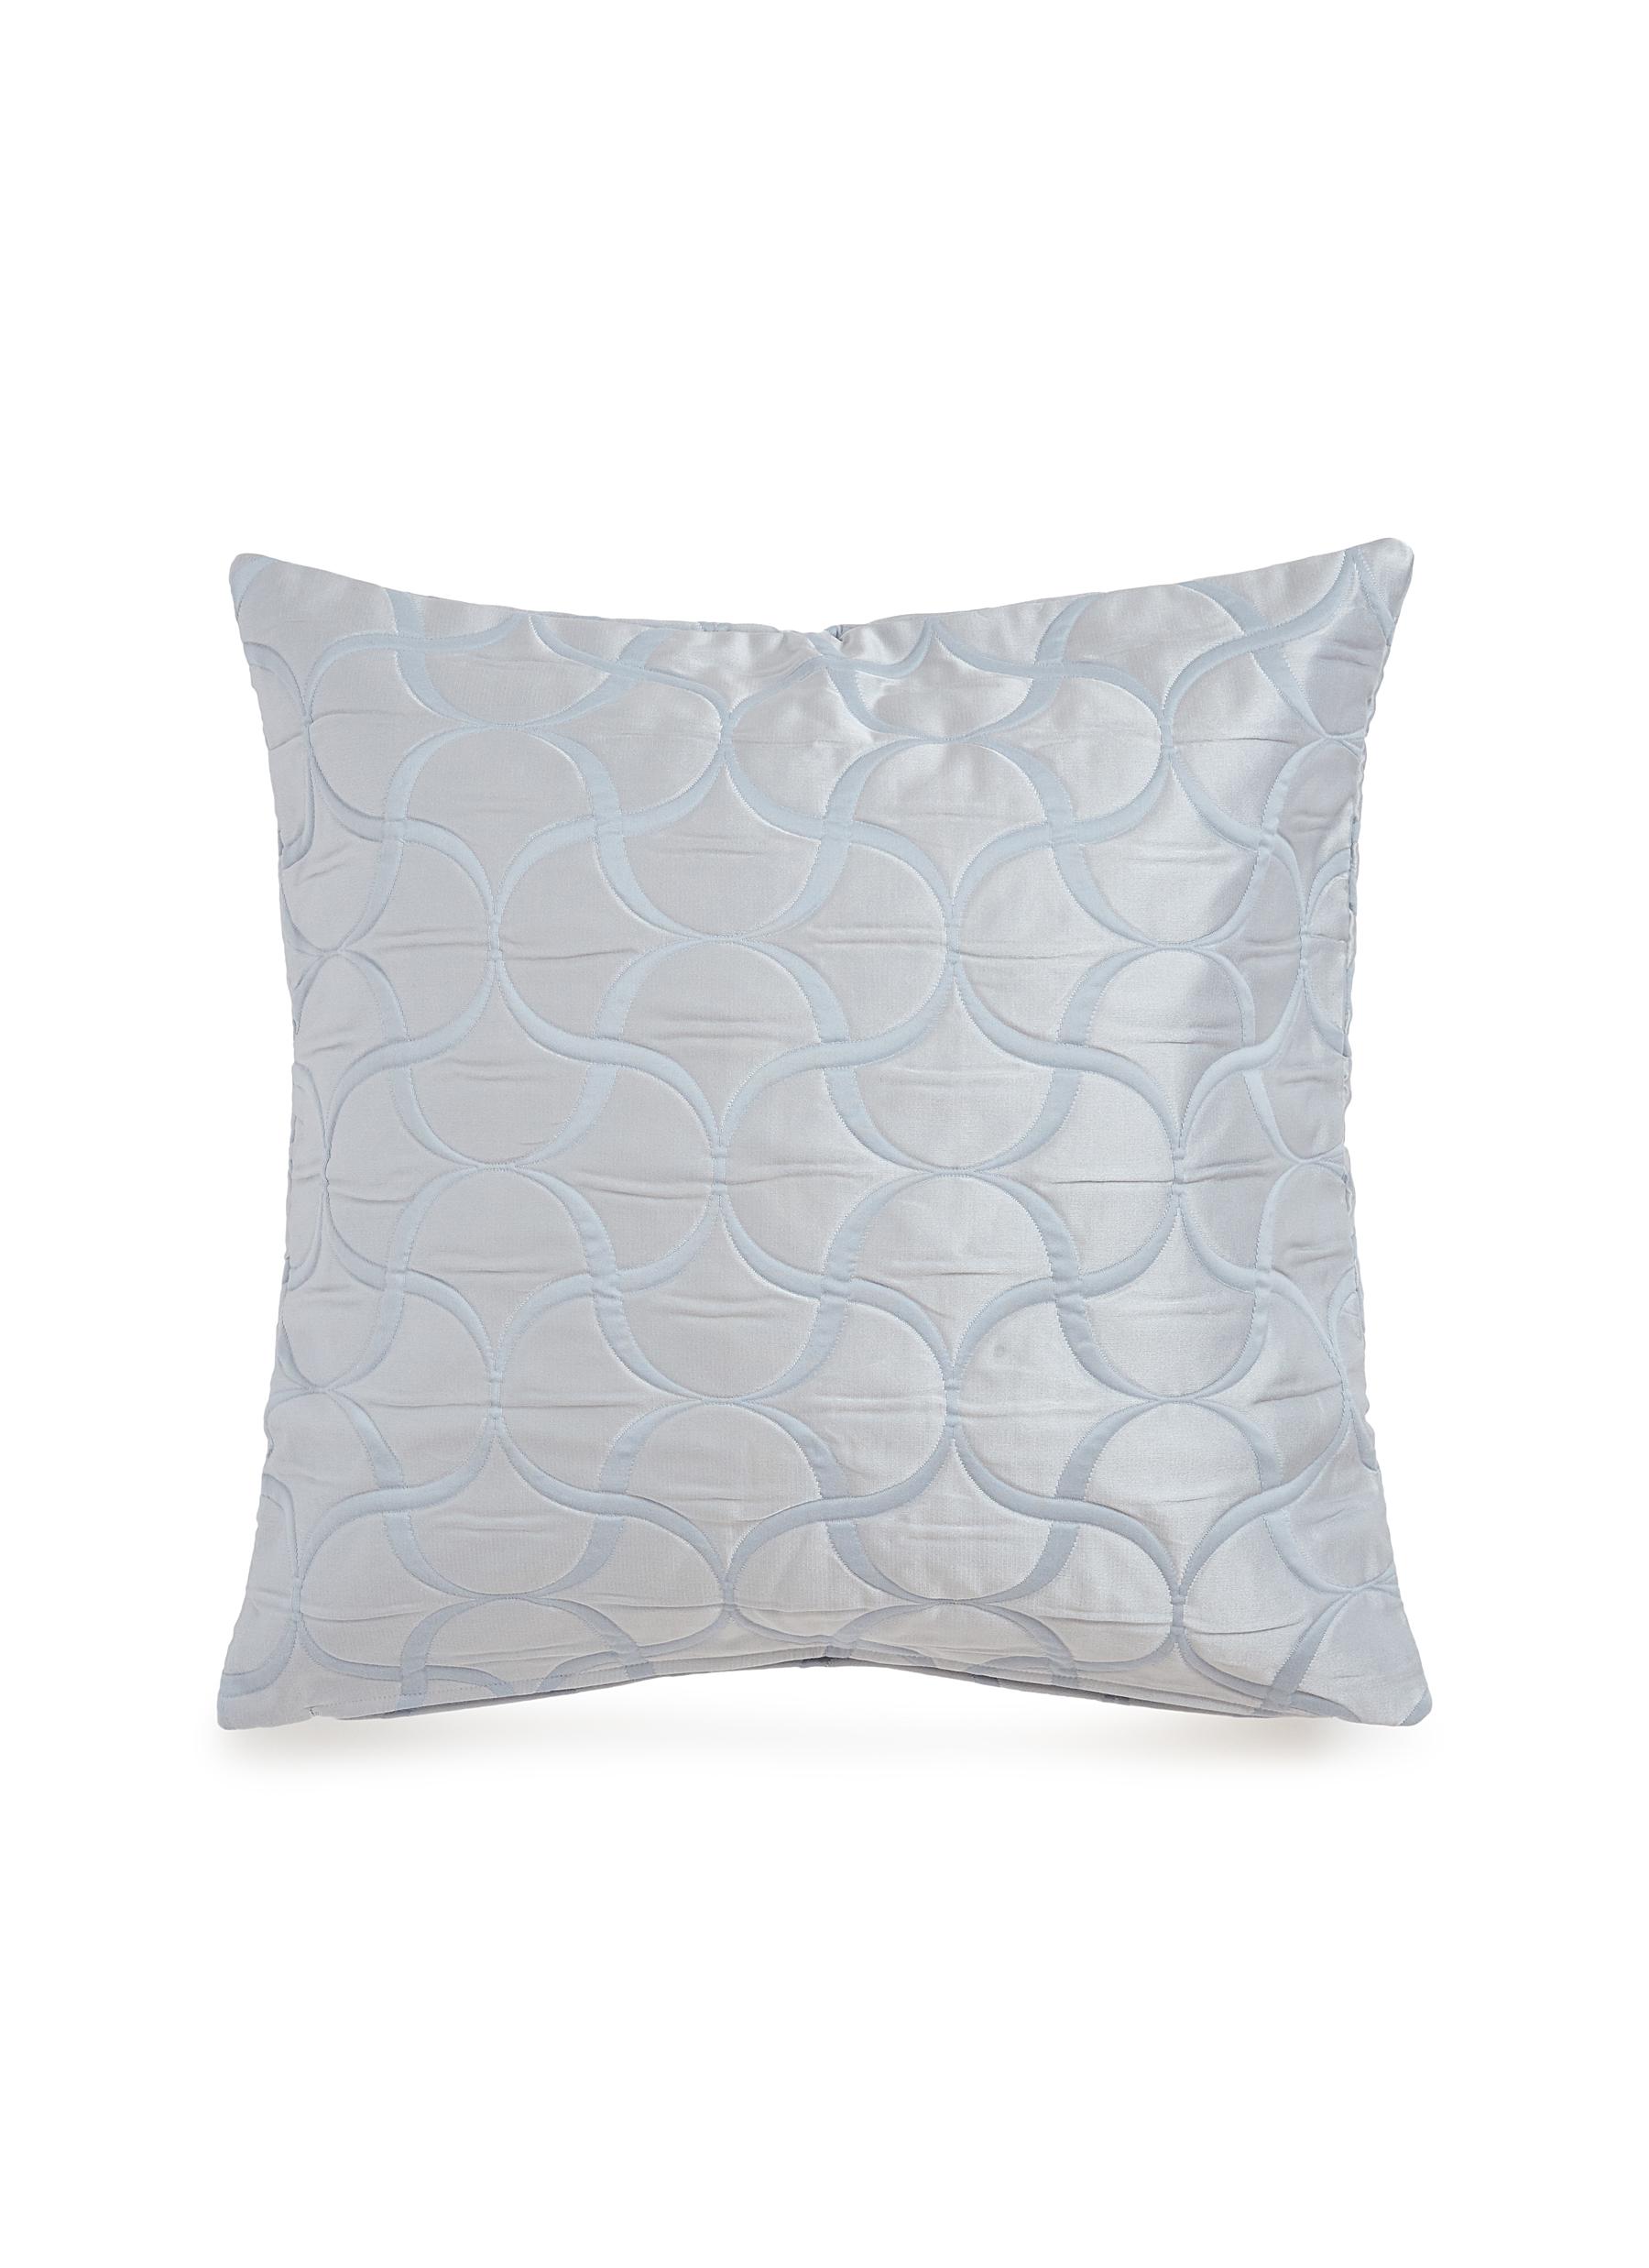 Tile small cushion cover - Light Blue